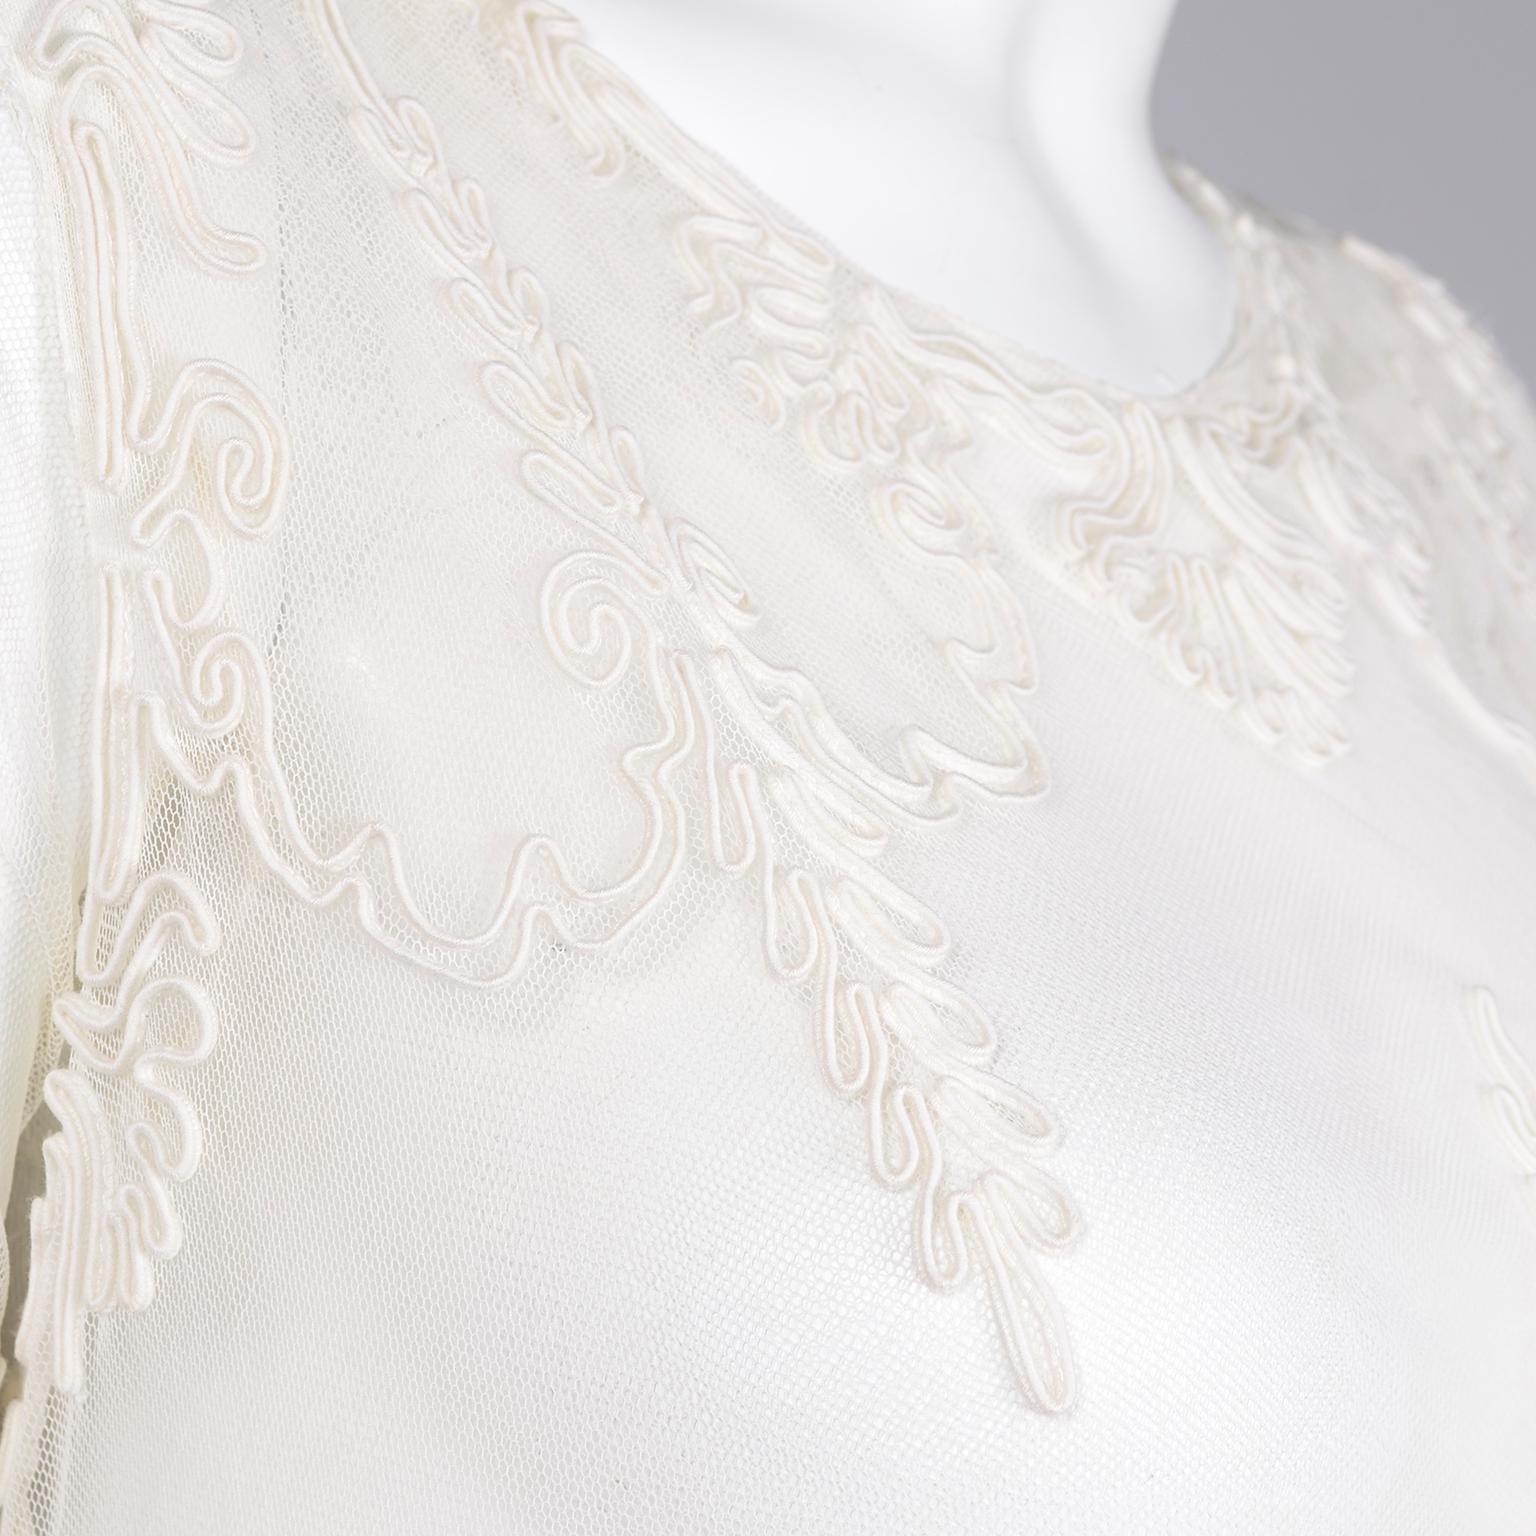 Antique Edwardian 1910s Vintage Ivory Net Tulle Dress W Soutache Embroidery Trim For Sale 4